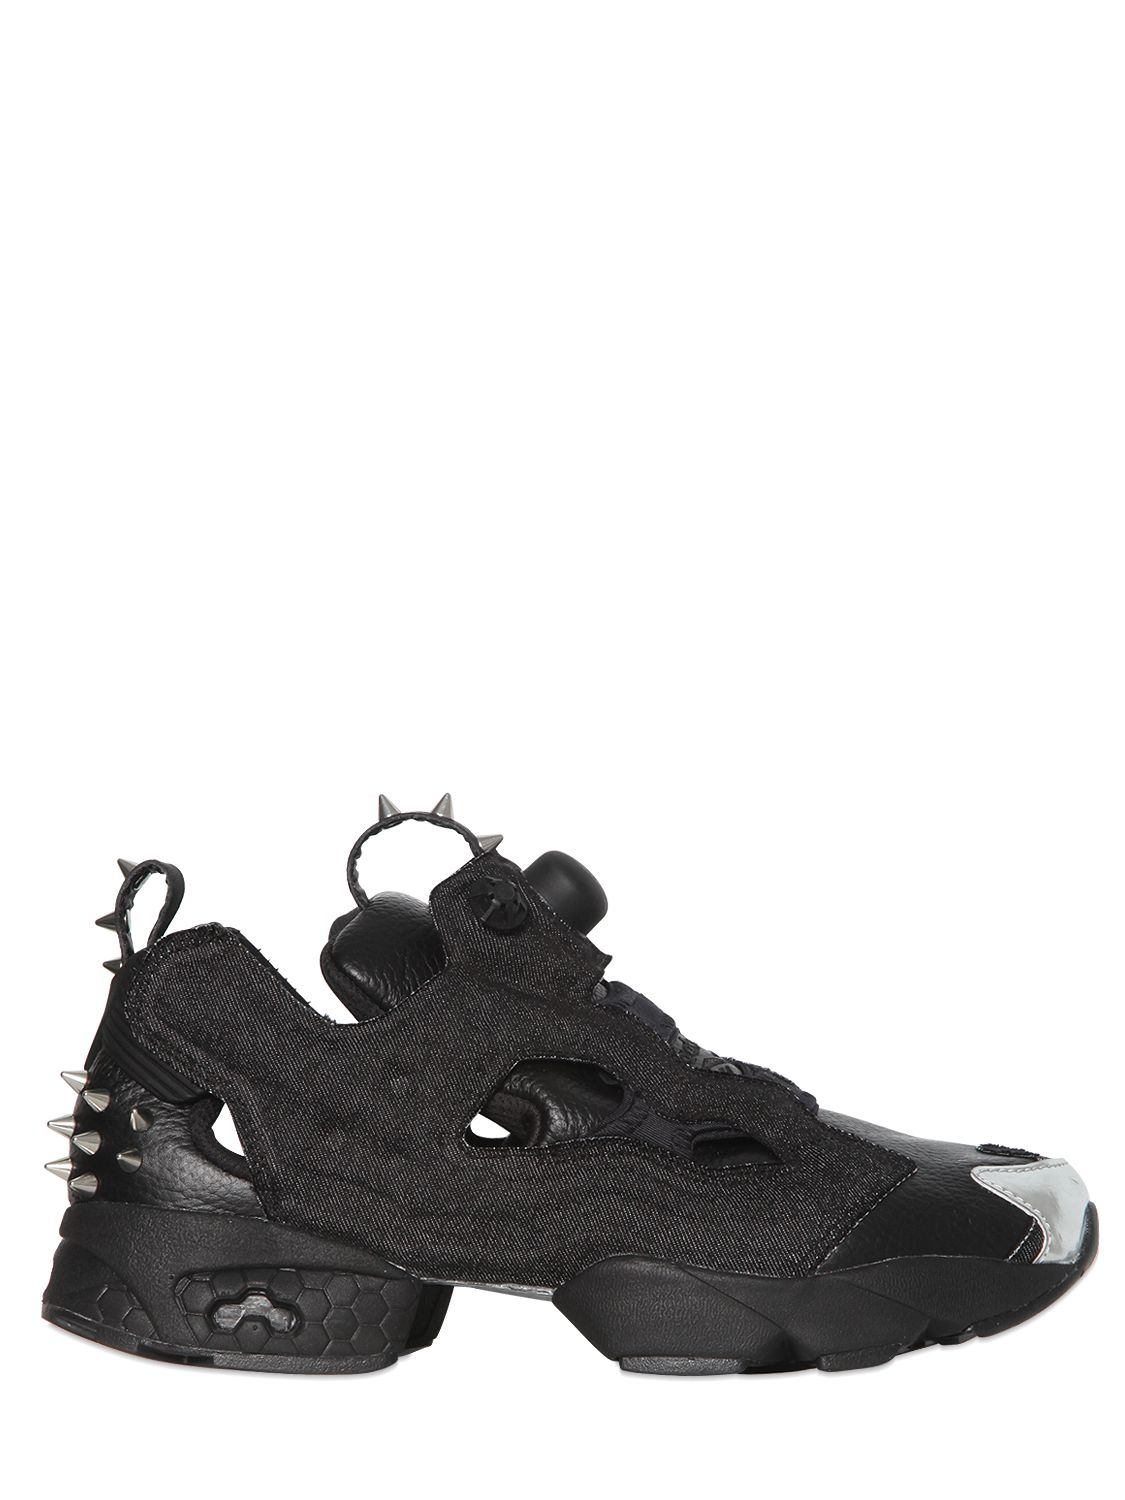 Reebok Synthetic Instapump Fury Nylon Sneakers W/ Spikes in Black for Men -  Lyst